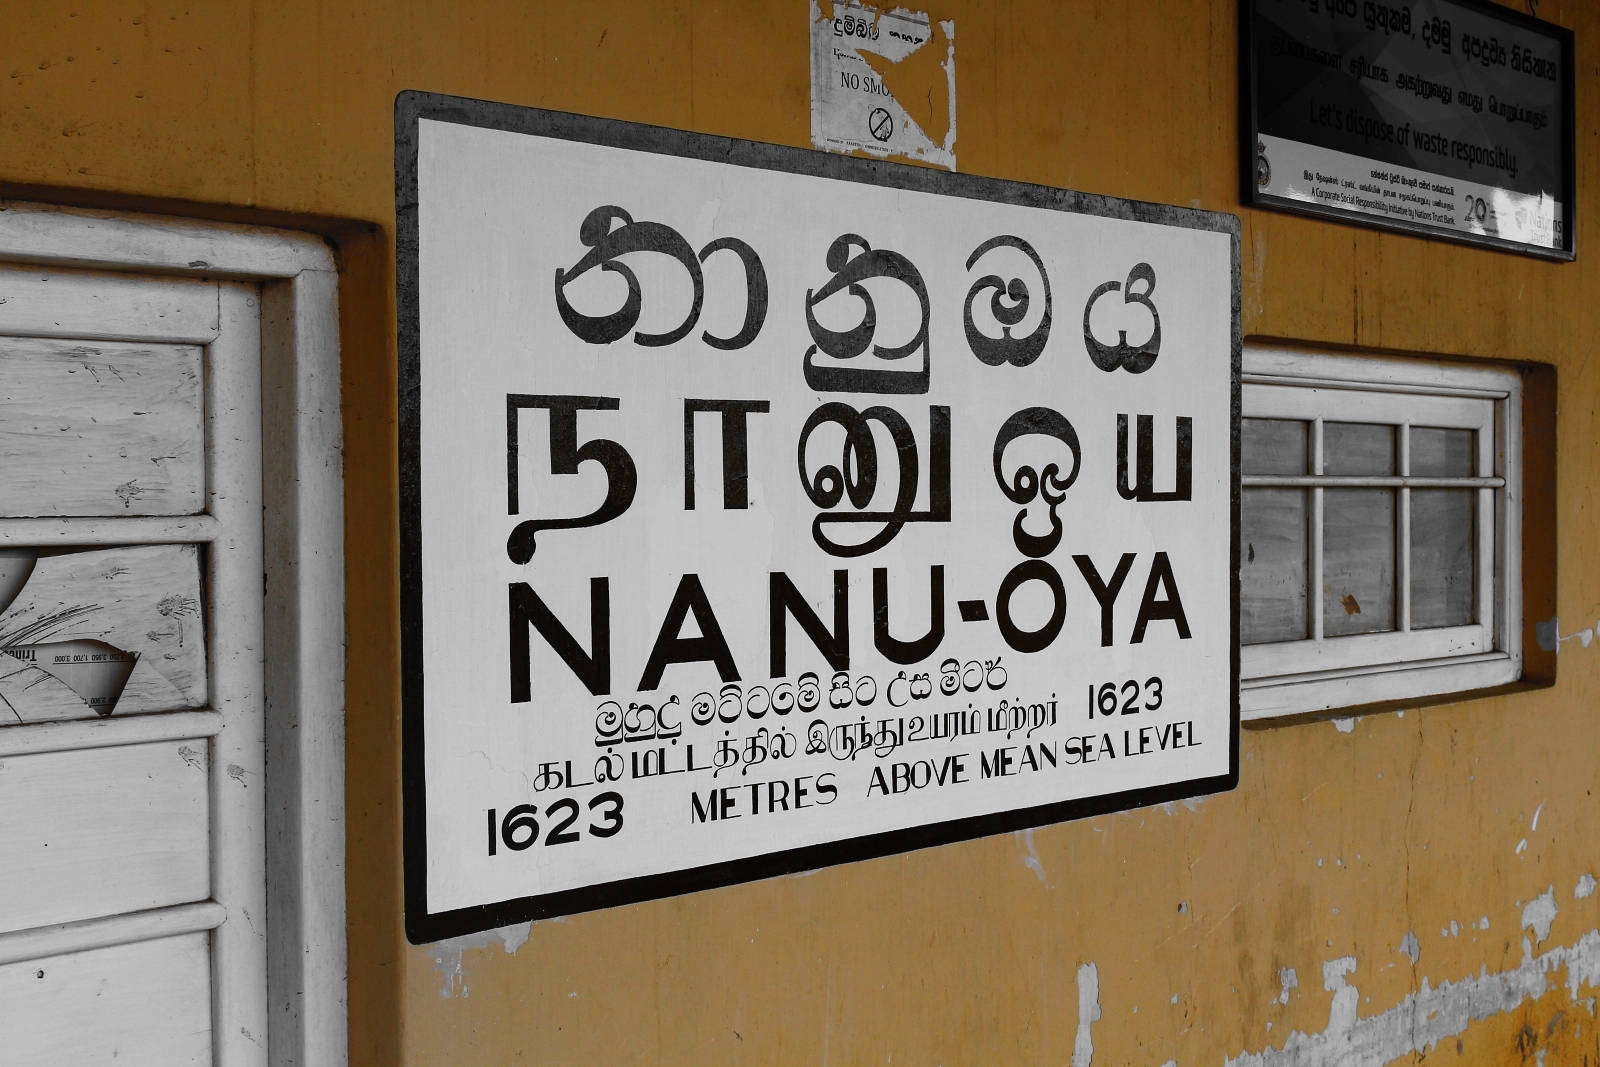 Nanu Oya Railway Station in Sri Lanka